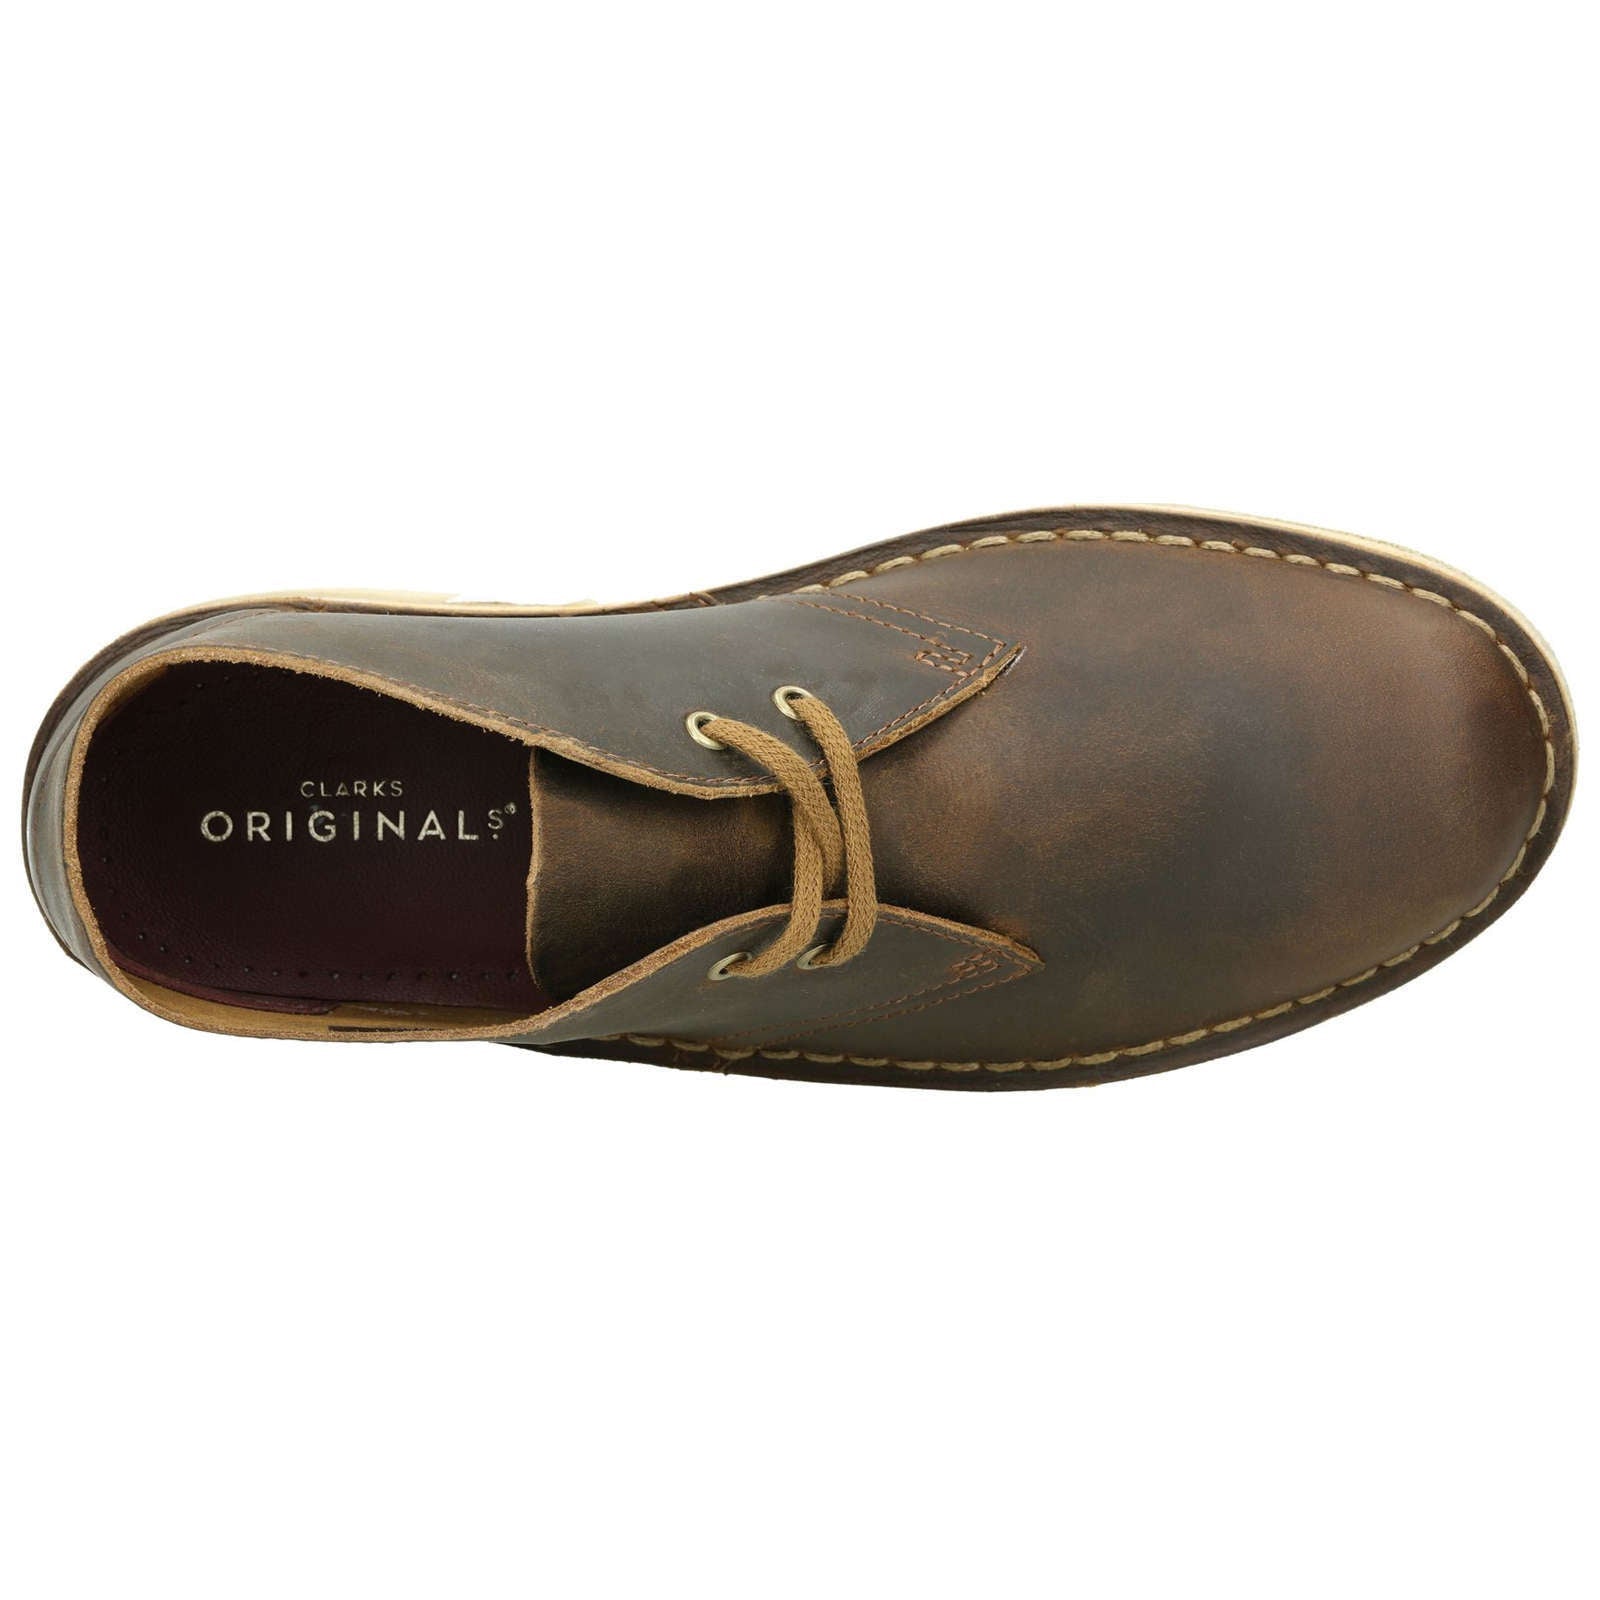 Clarks Originals Desert Boot Leather Women's Boots#color_beeswax